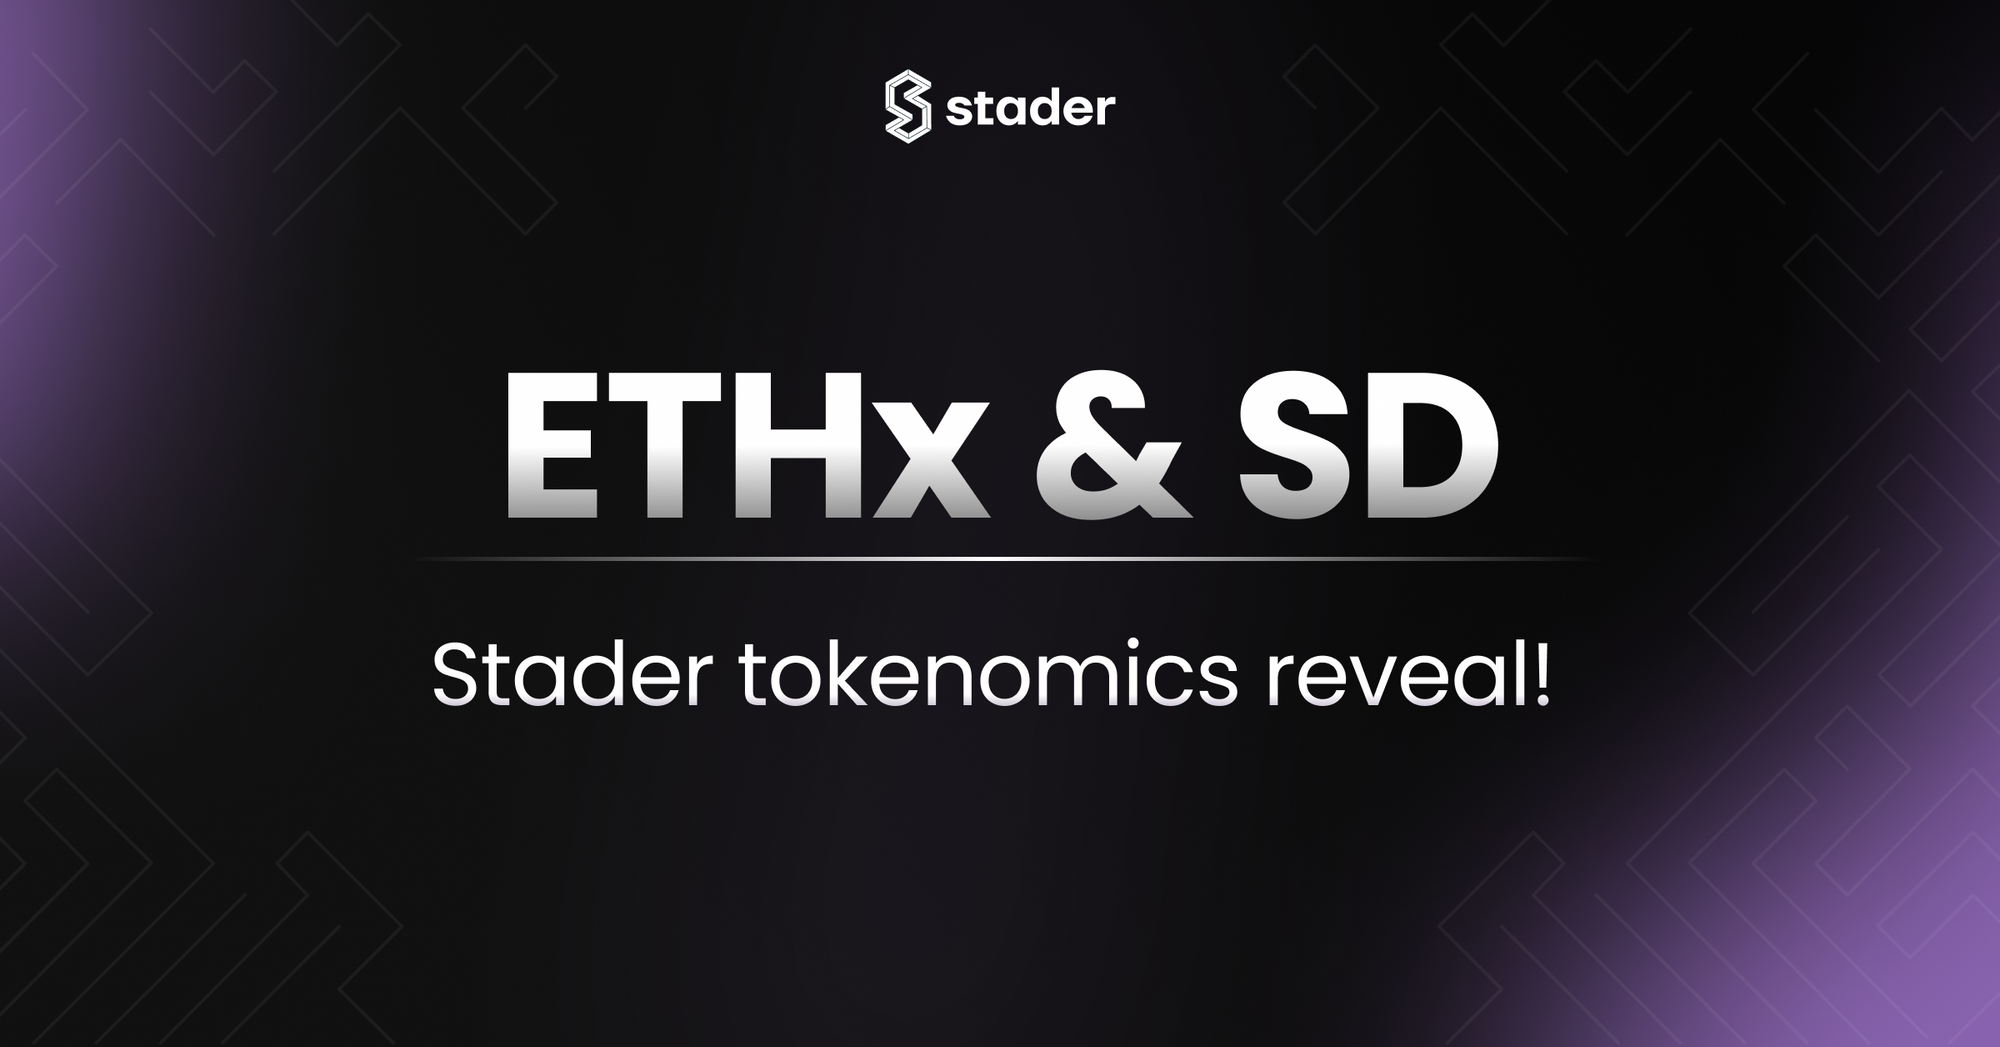 ETHx & SD: Stader’s node operator-centric tokenomics